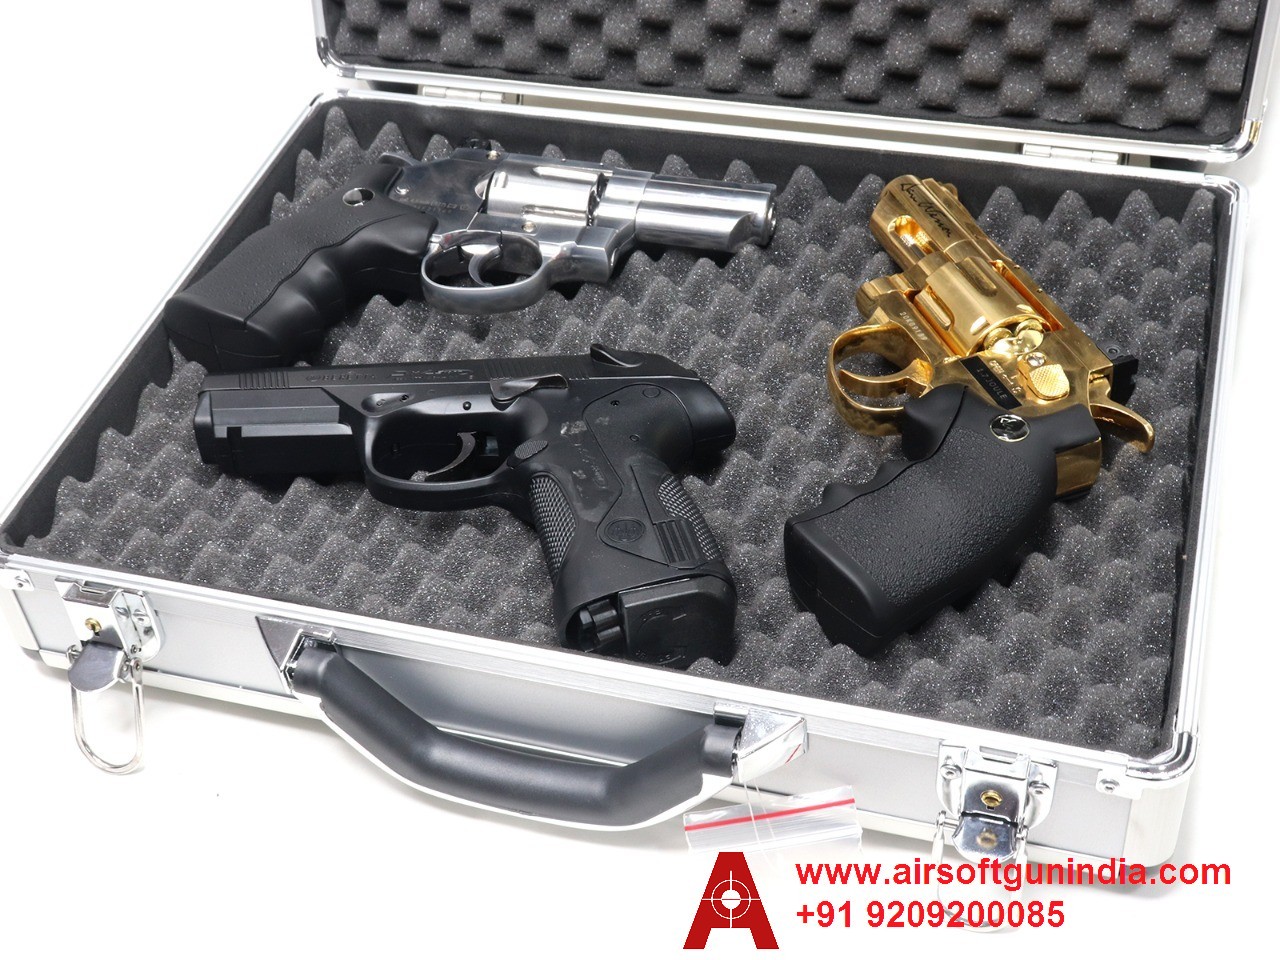 Airsoft Gun India Aluminium Gun Box For Multiple Gun